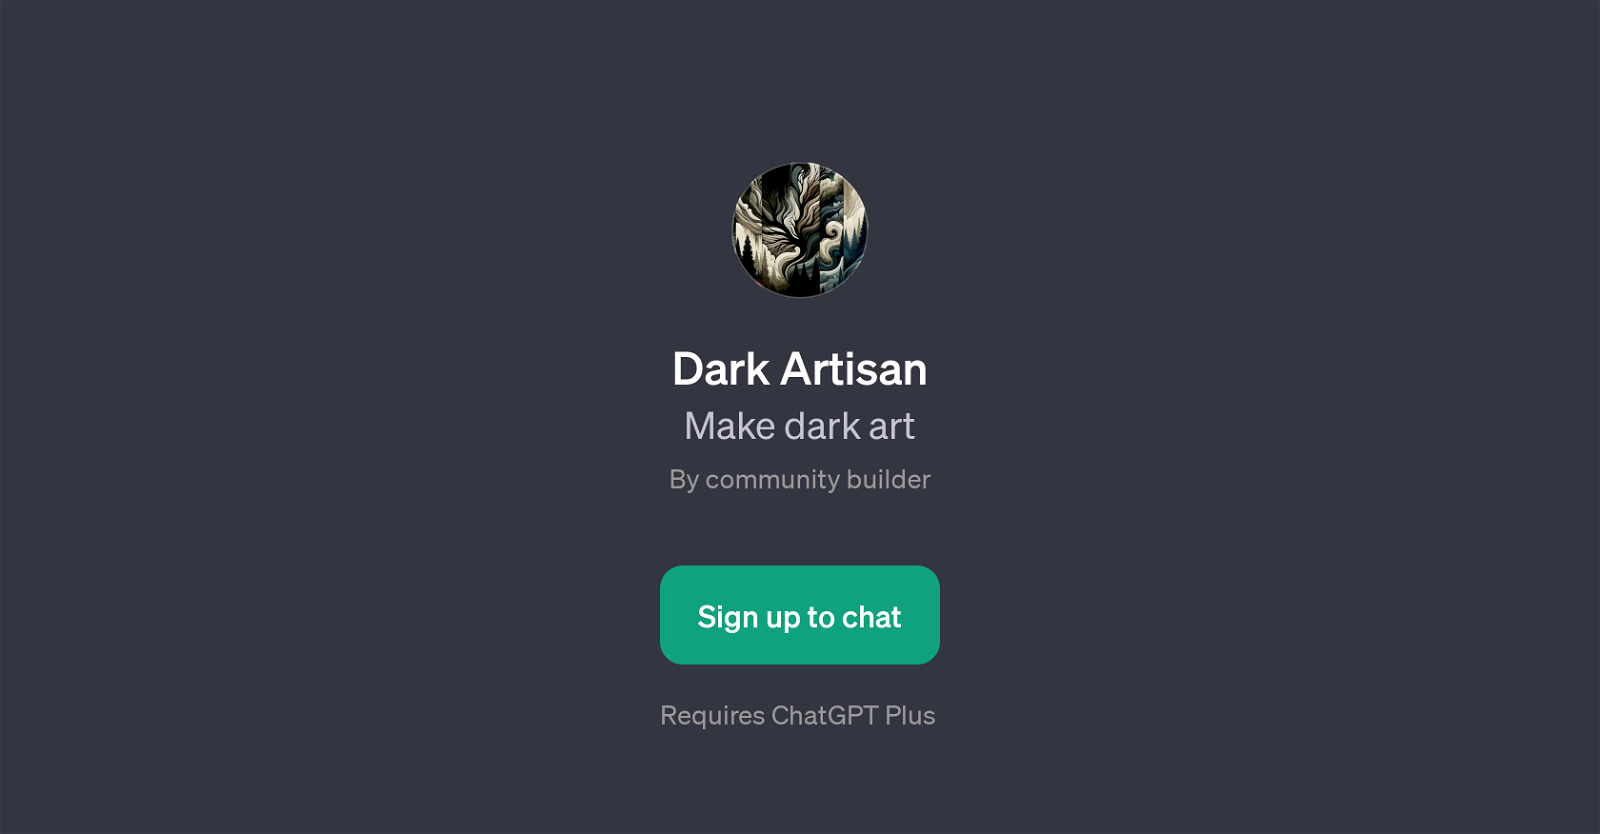 Dark Artisan website